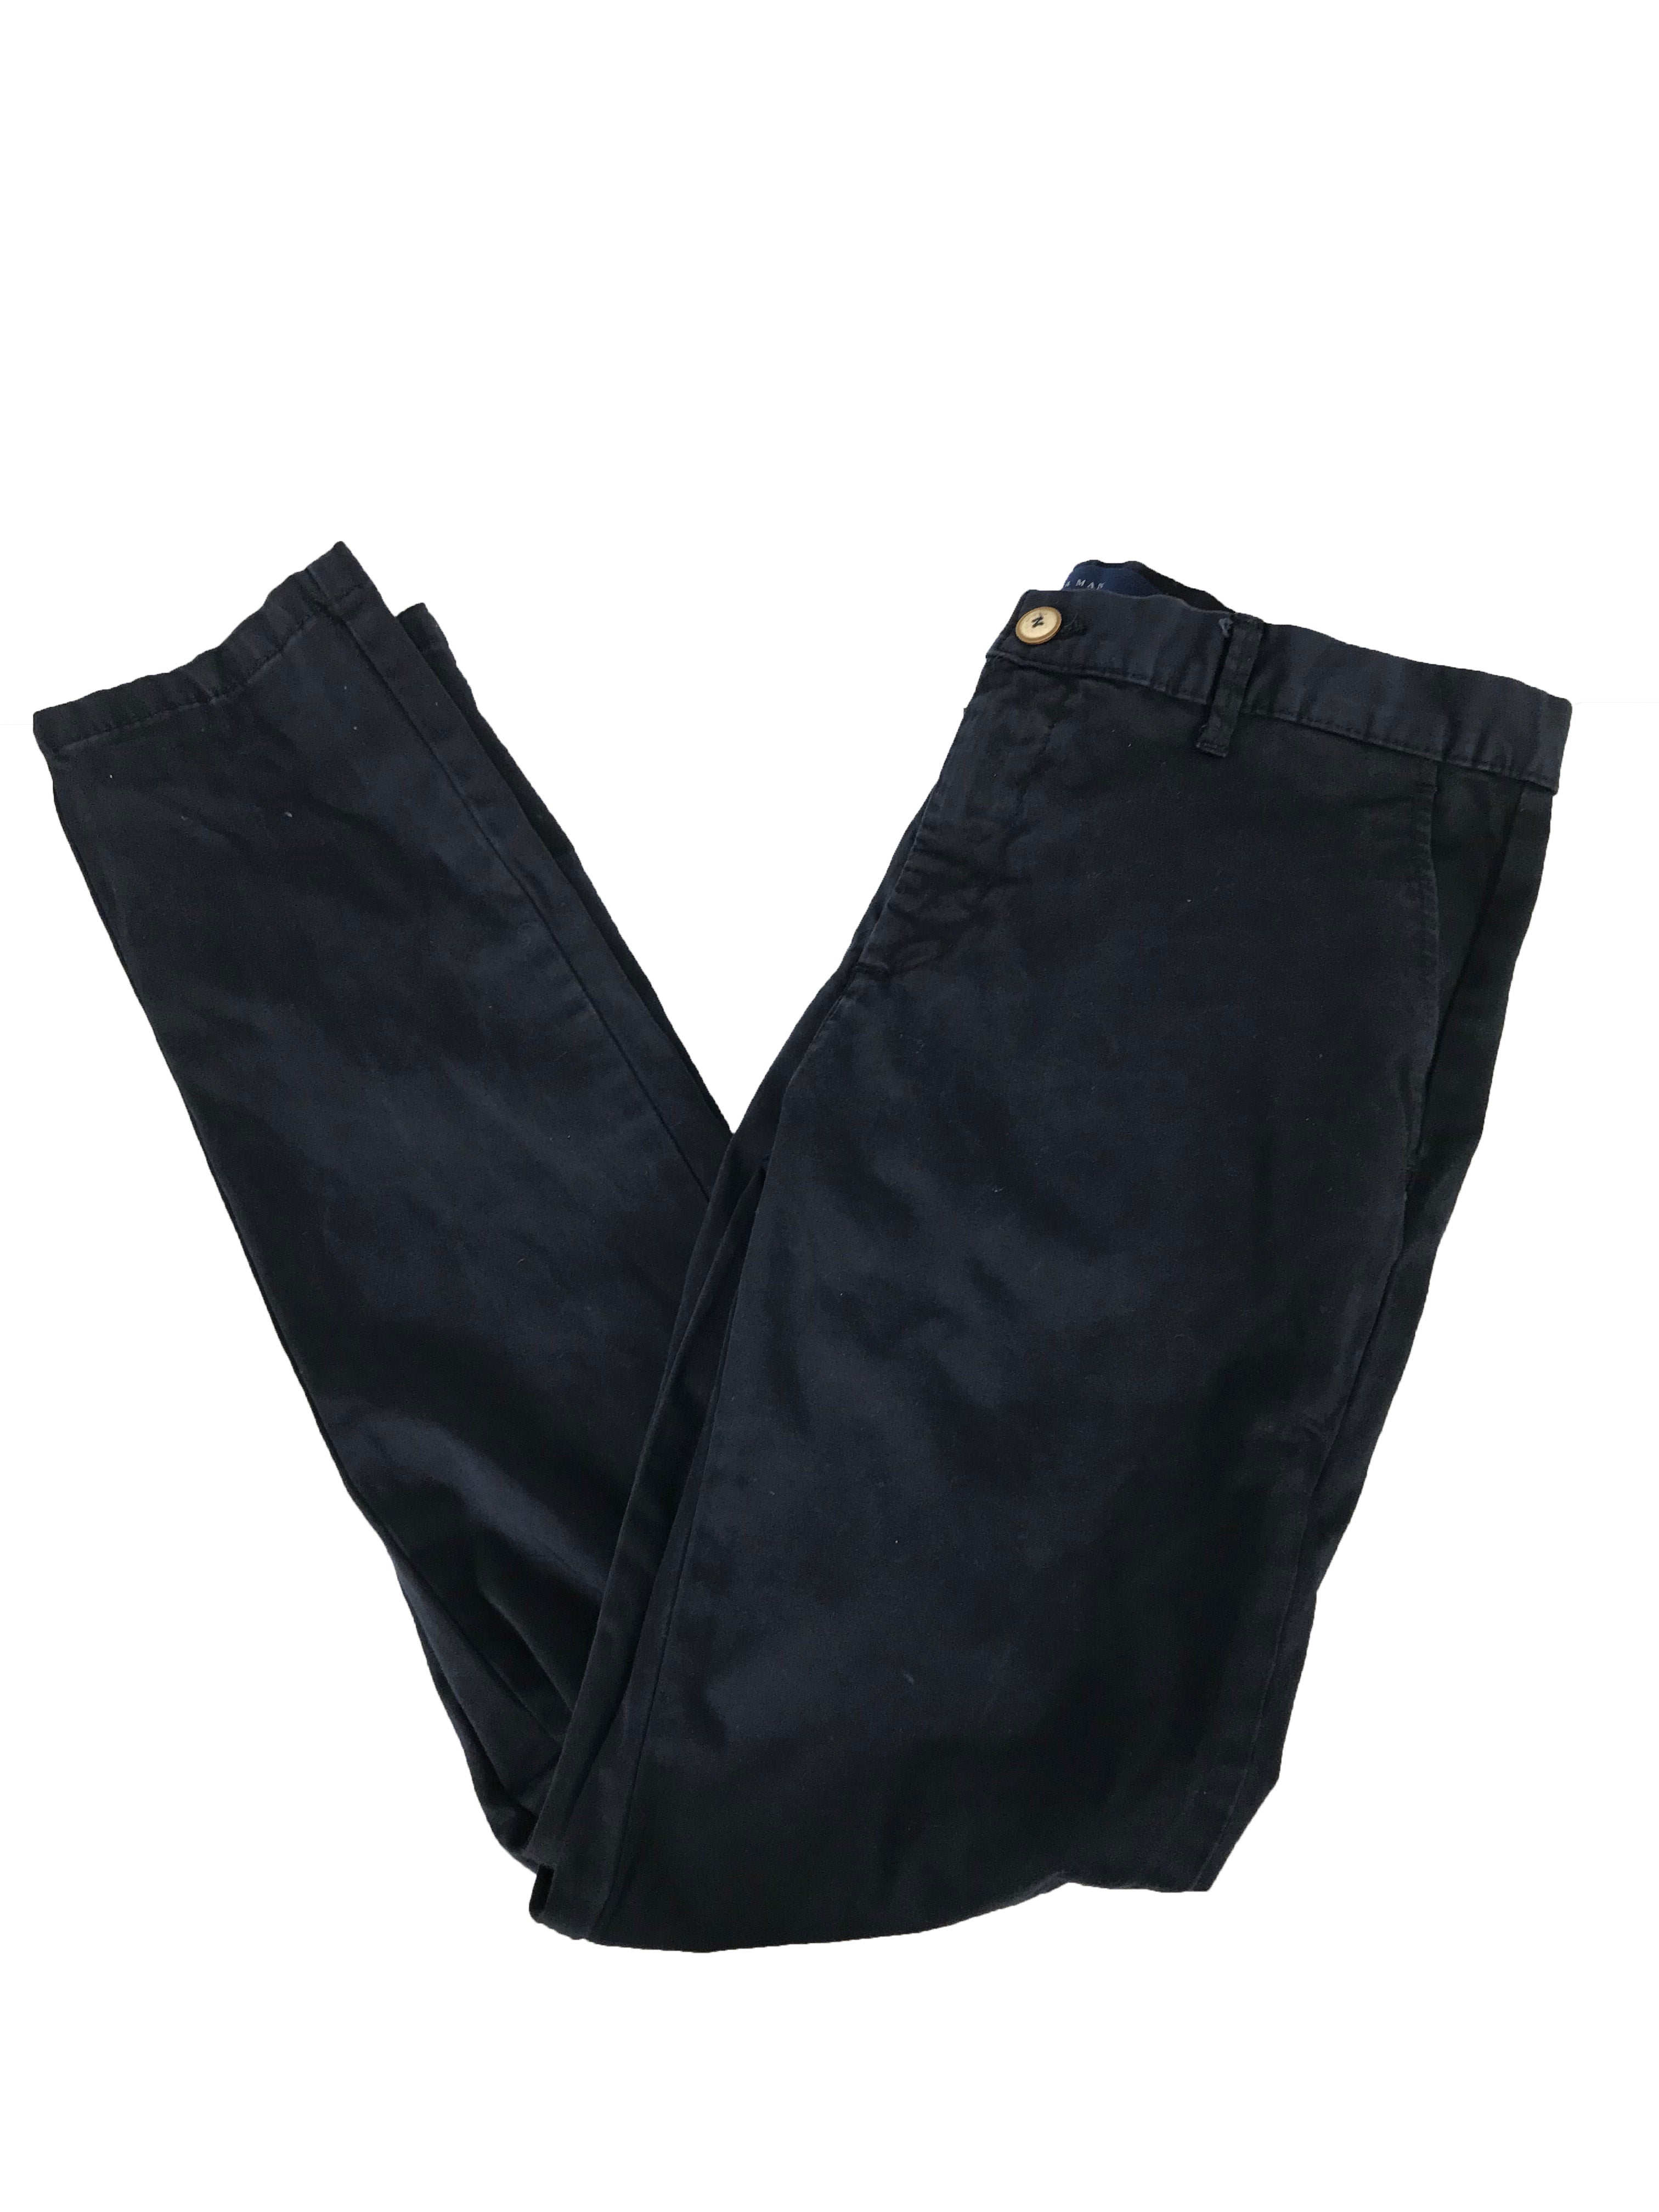 Zara Man Navy Blue Casual Dress Pants Men's Size 31